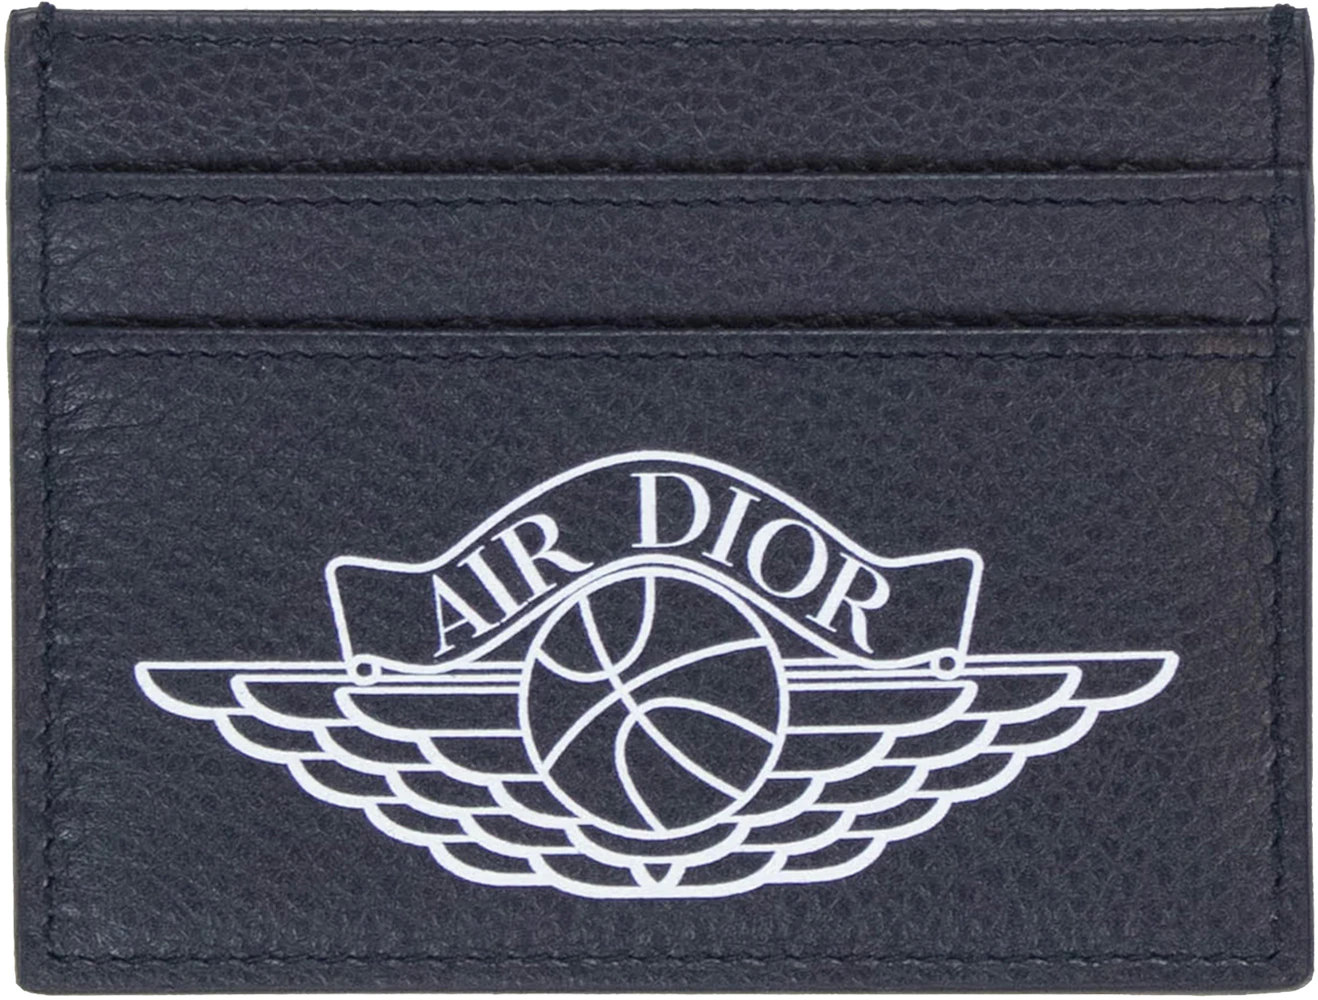 thyNg Dior X Jordan Navy Wallet Charlotte Hornets PE, IetpShops